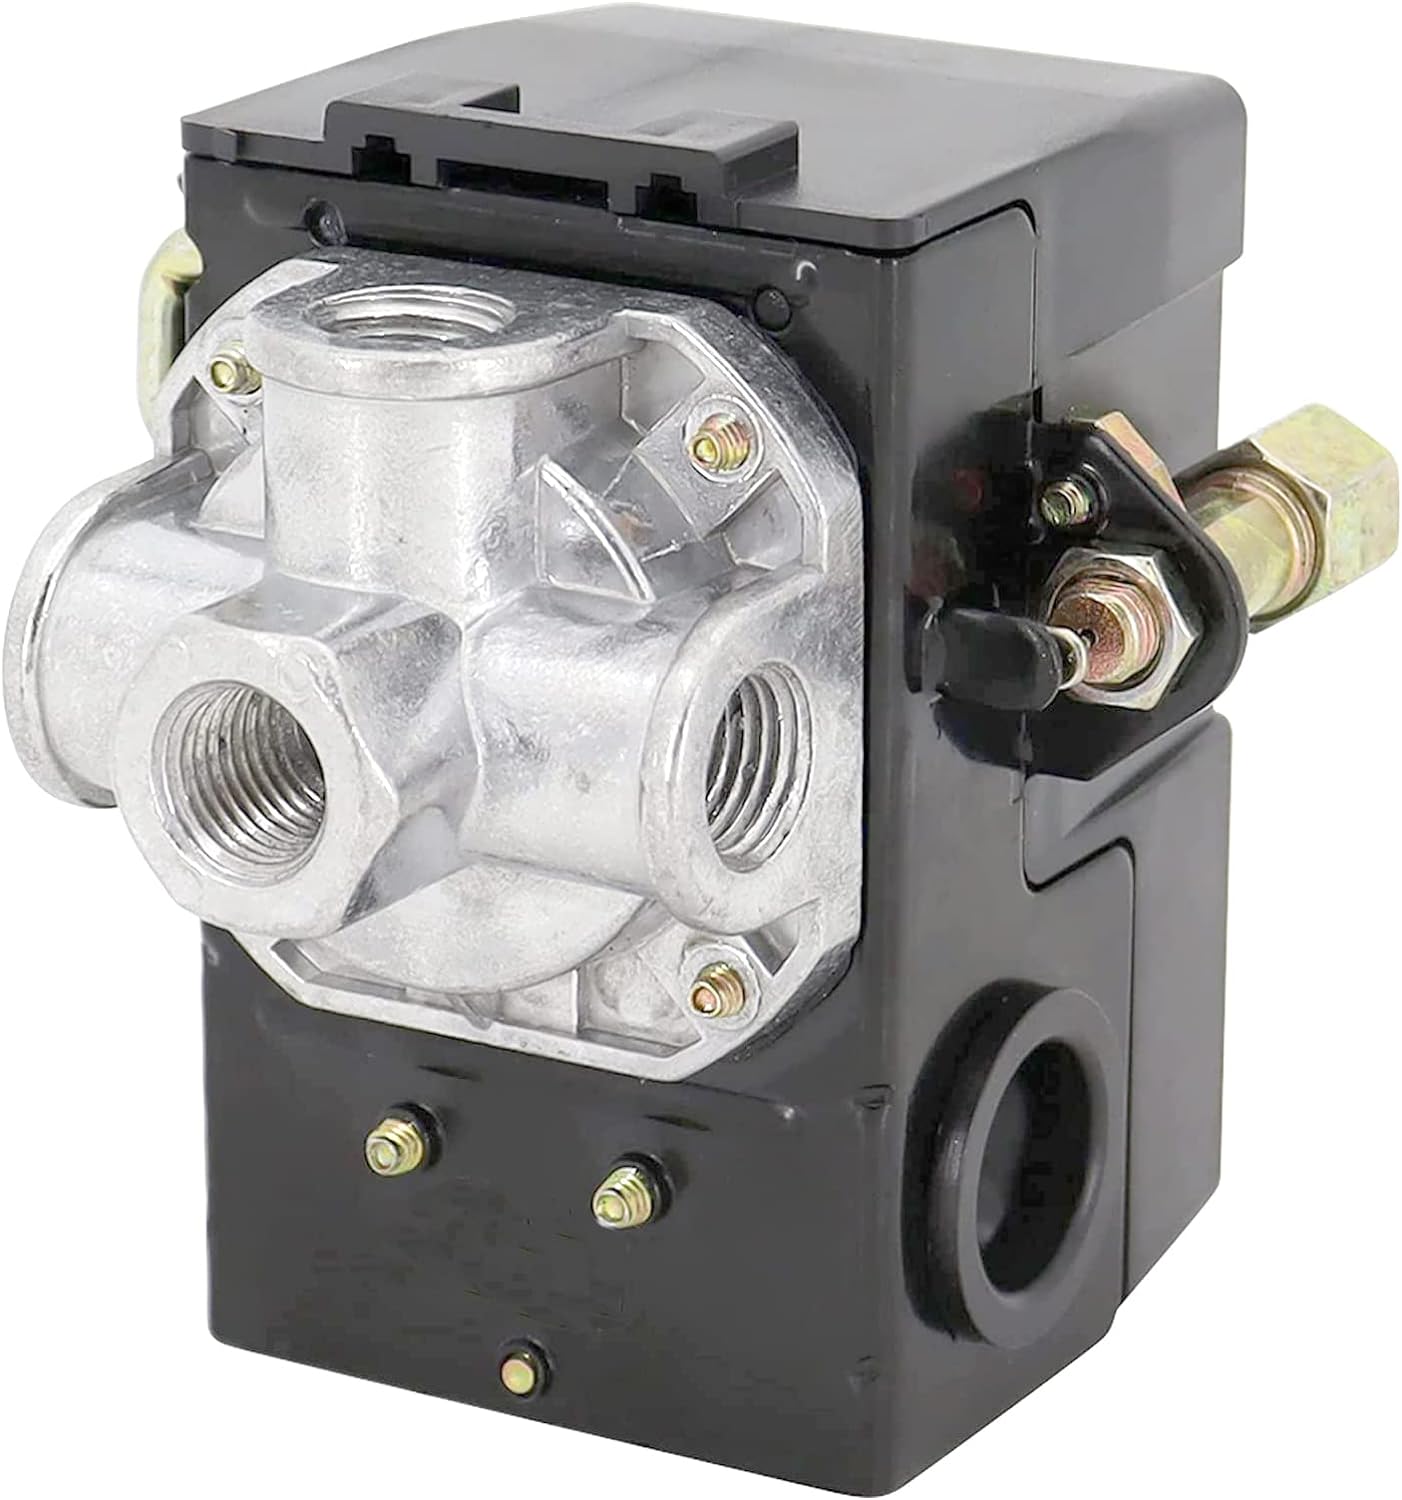 Huivlei LF10-4H Pressure Switch, 4 Port Air Compressor Pressure Switch Replacement Control NPT1/4 95-125 PSI 20A